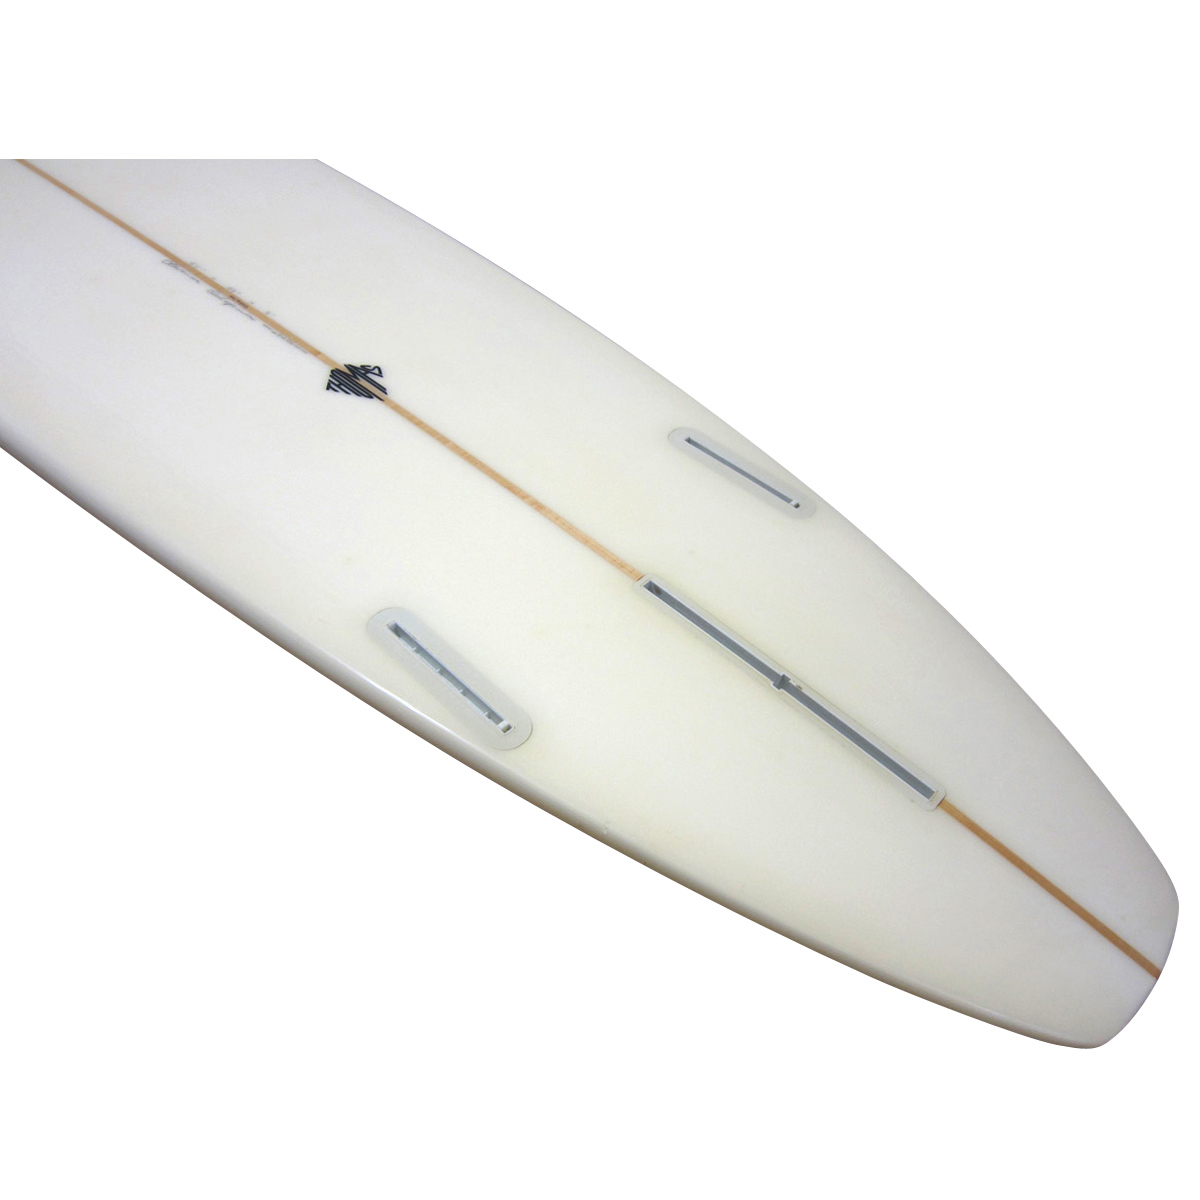 Honolua Surf Co / 9`5 Custom